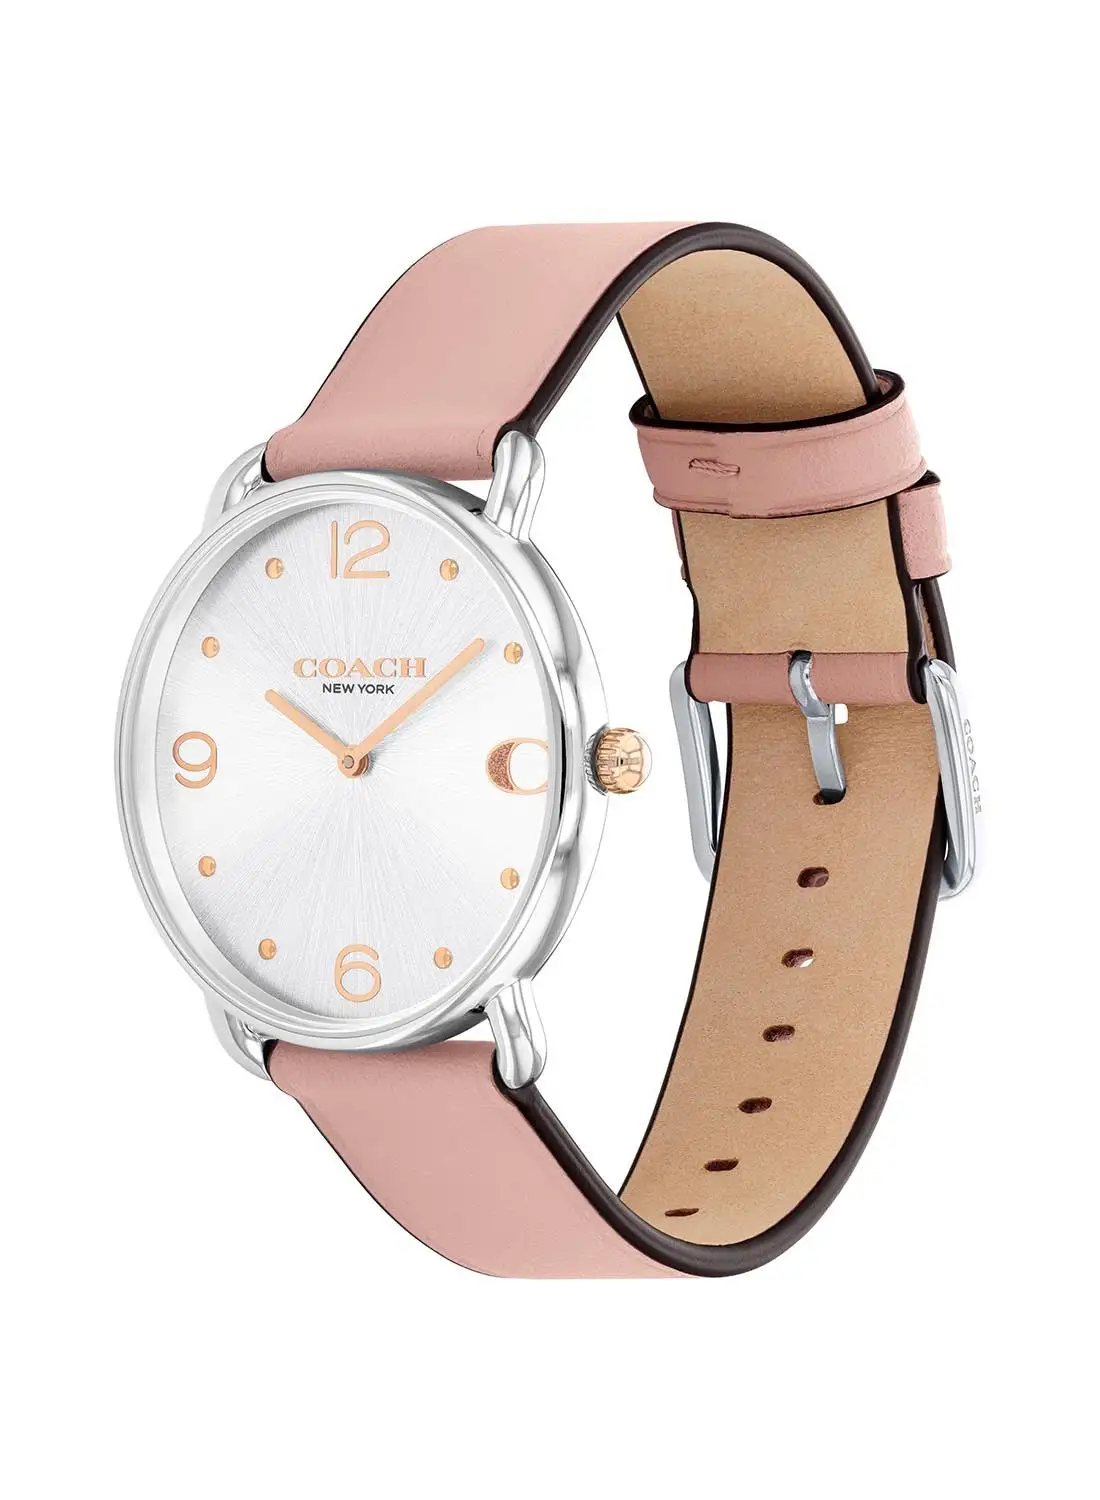 COACH Women's Analog Round Shape Leather Wrist Watch 14504199 - 36 Mm